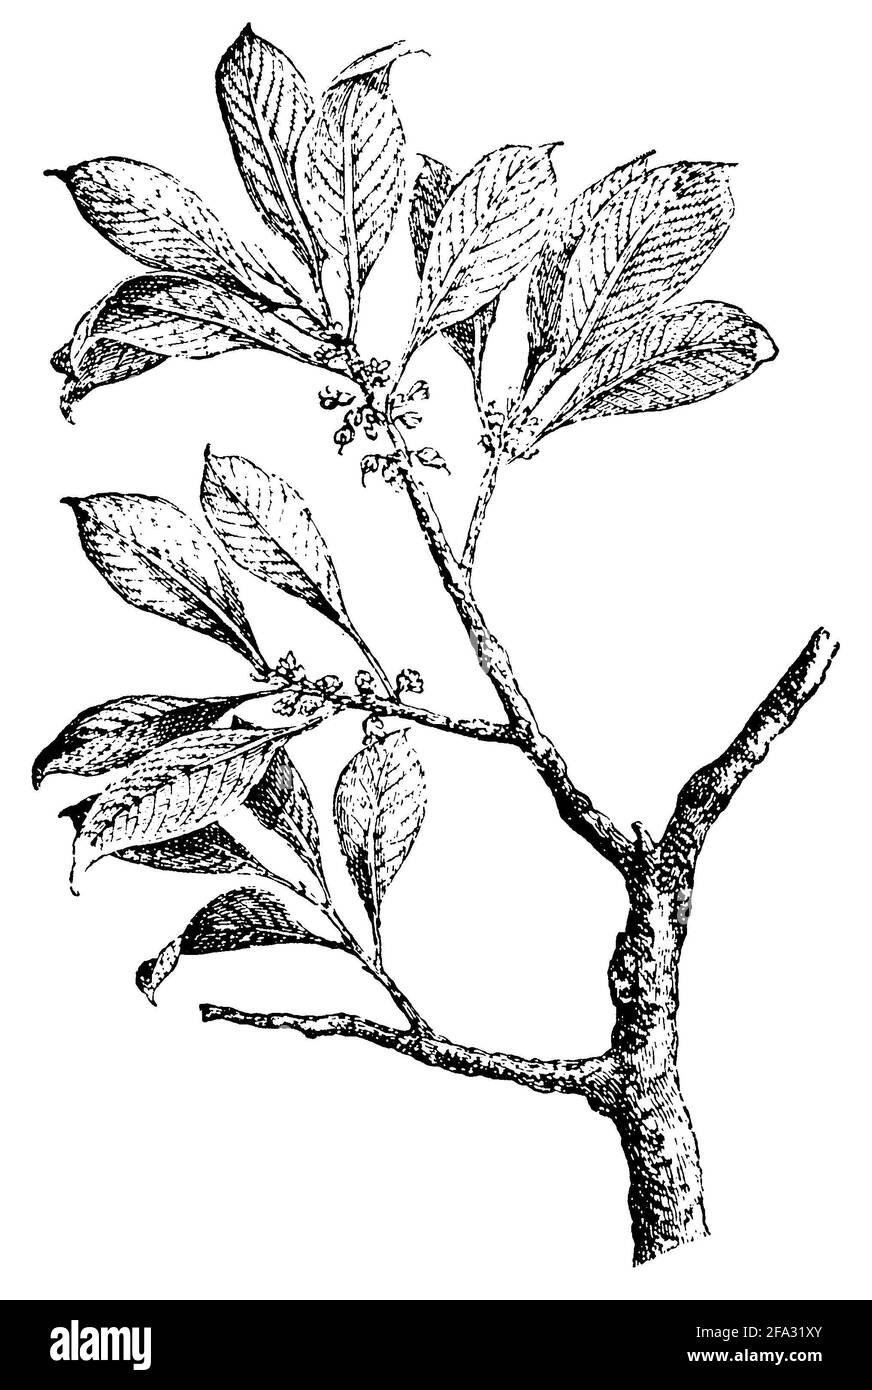 Palaquium gutta / Palaquium gutta / Guttaperchabaum (encyclopedia, 1890) Stock Photo